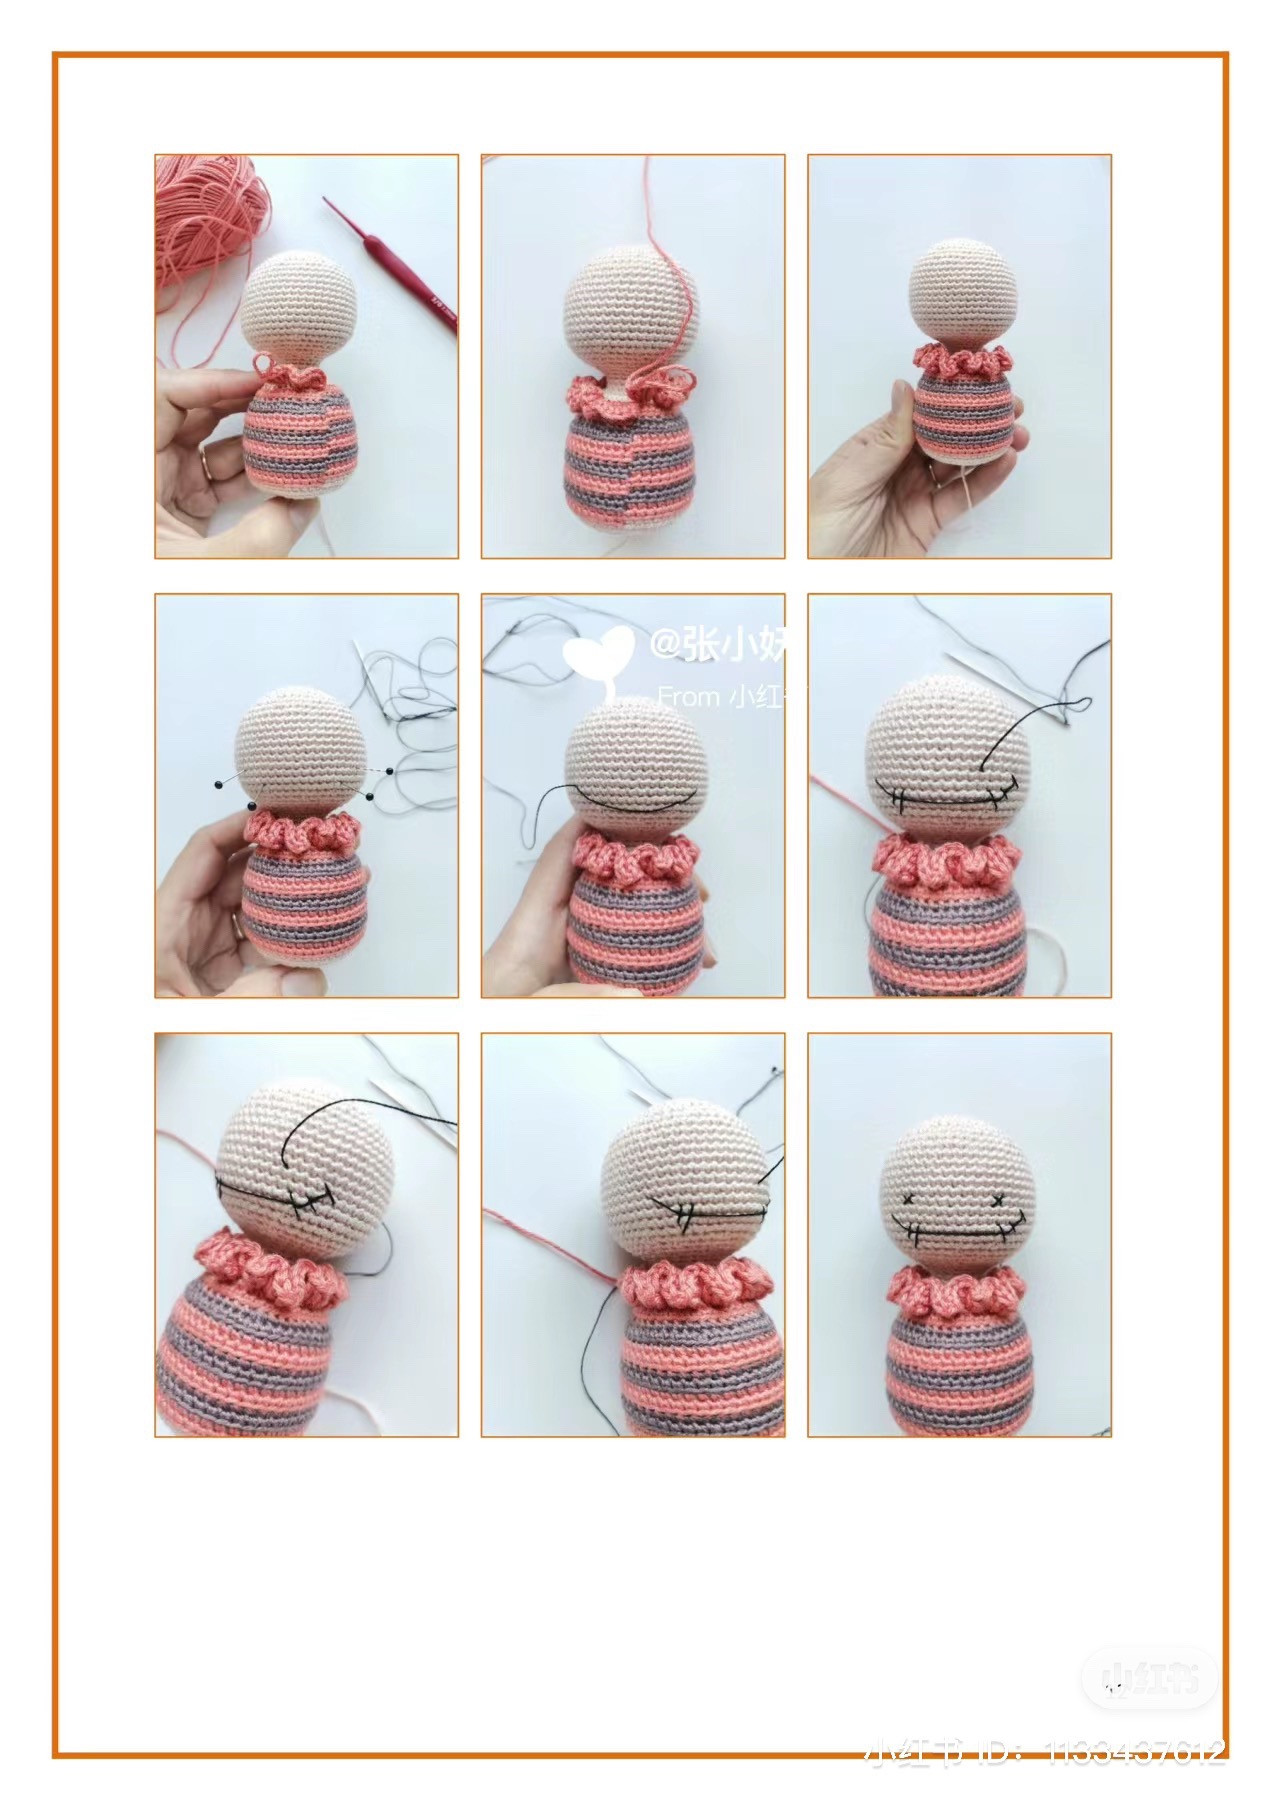 mannequin crochet pattern